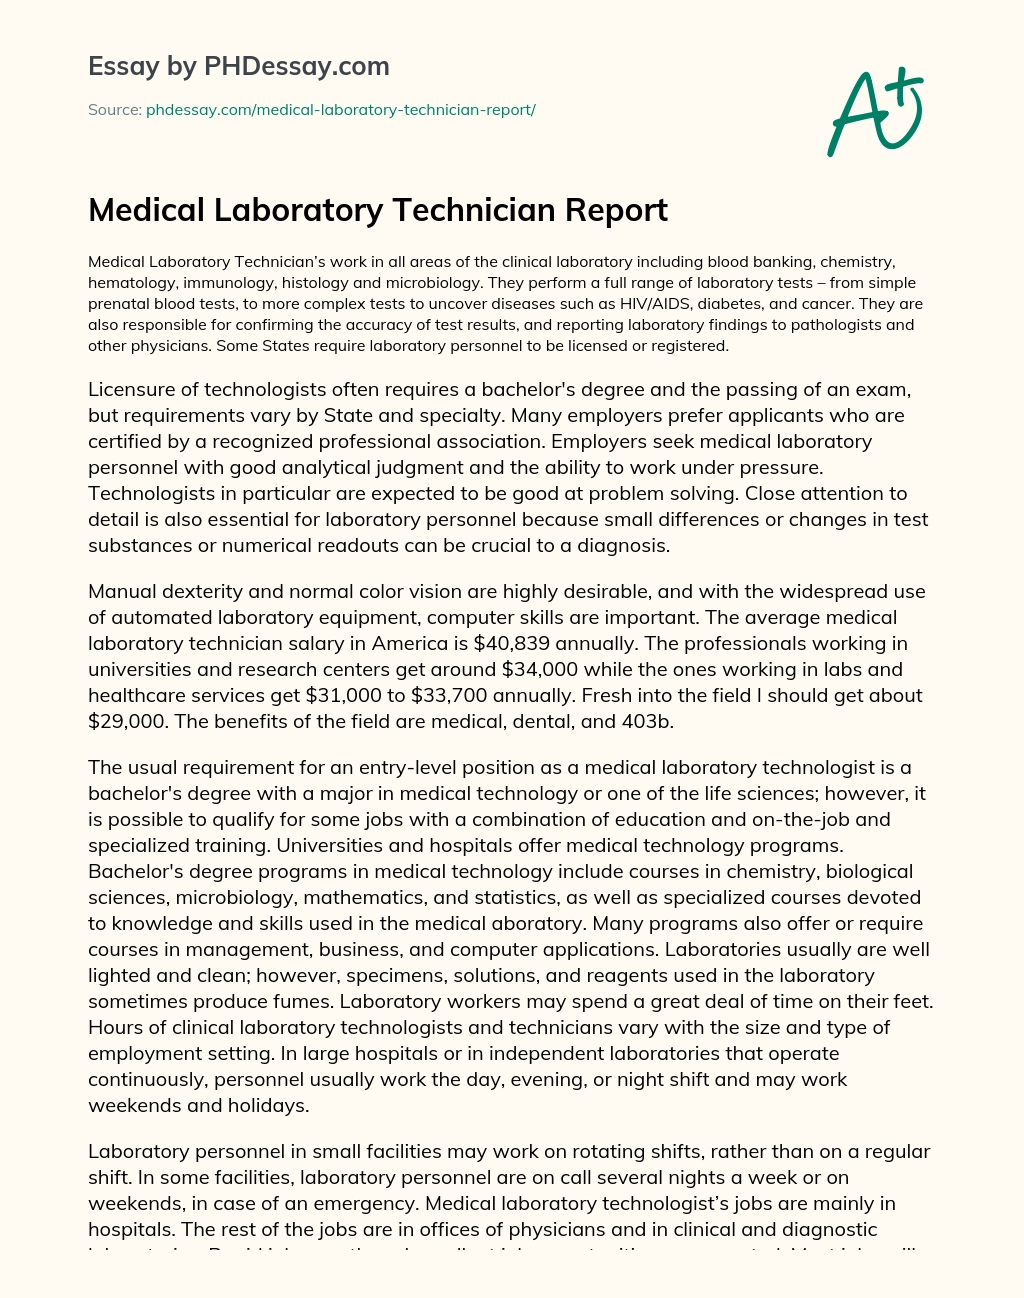 Medical Laboratory Technician Report essay